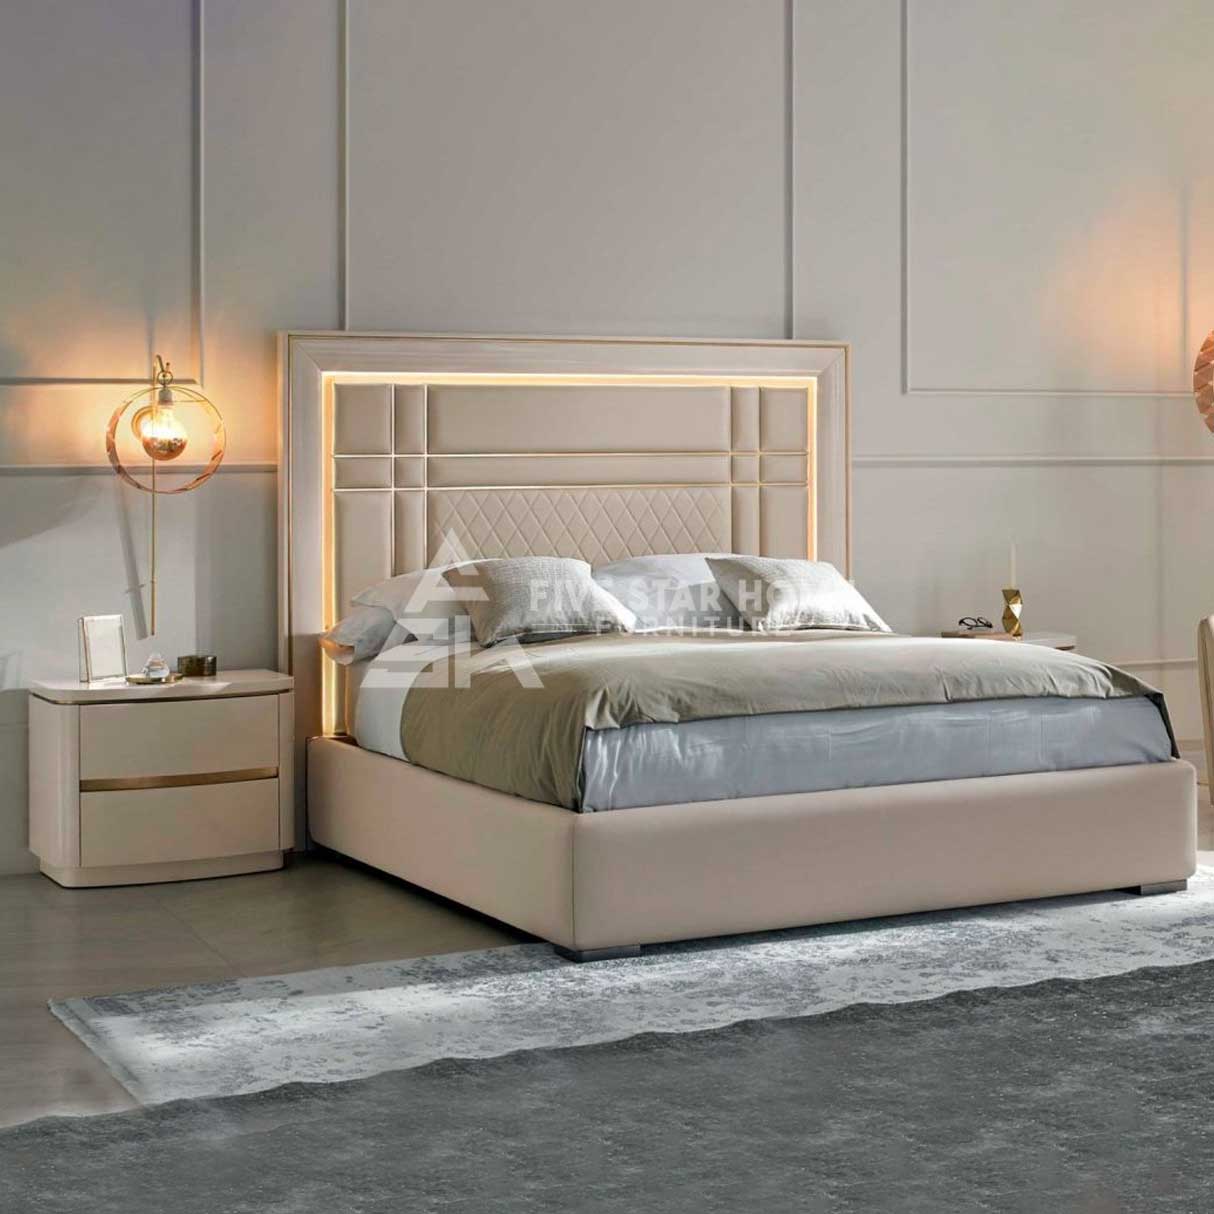 Fsh Xlux Bed With A Modern Design